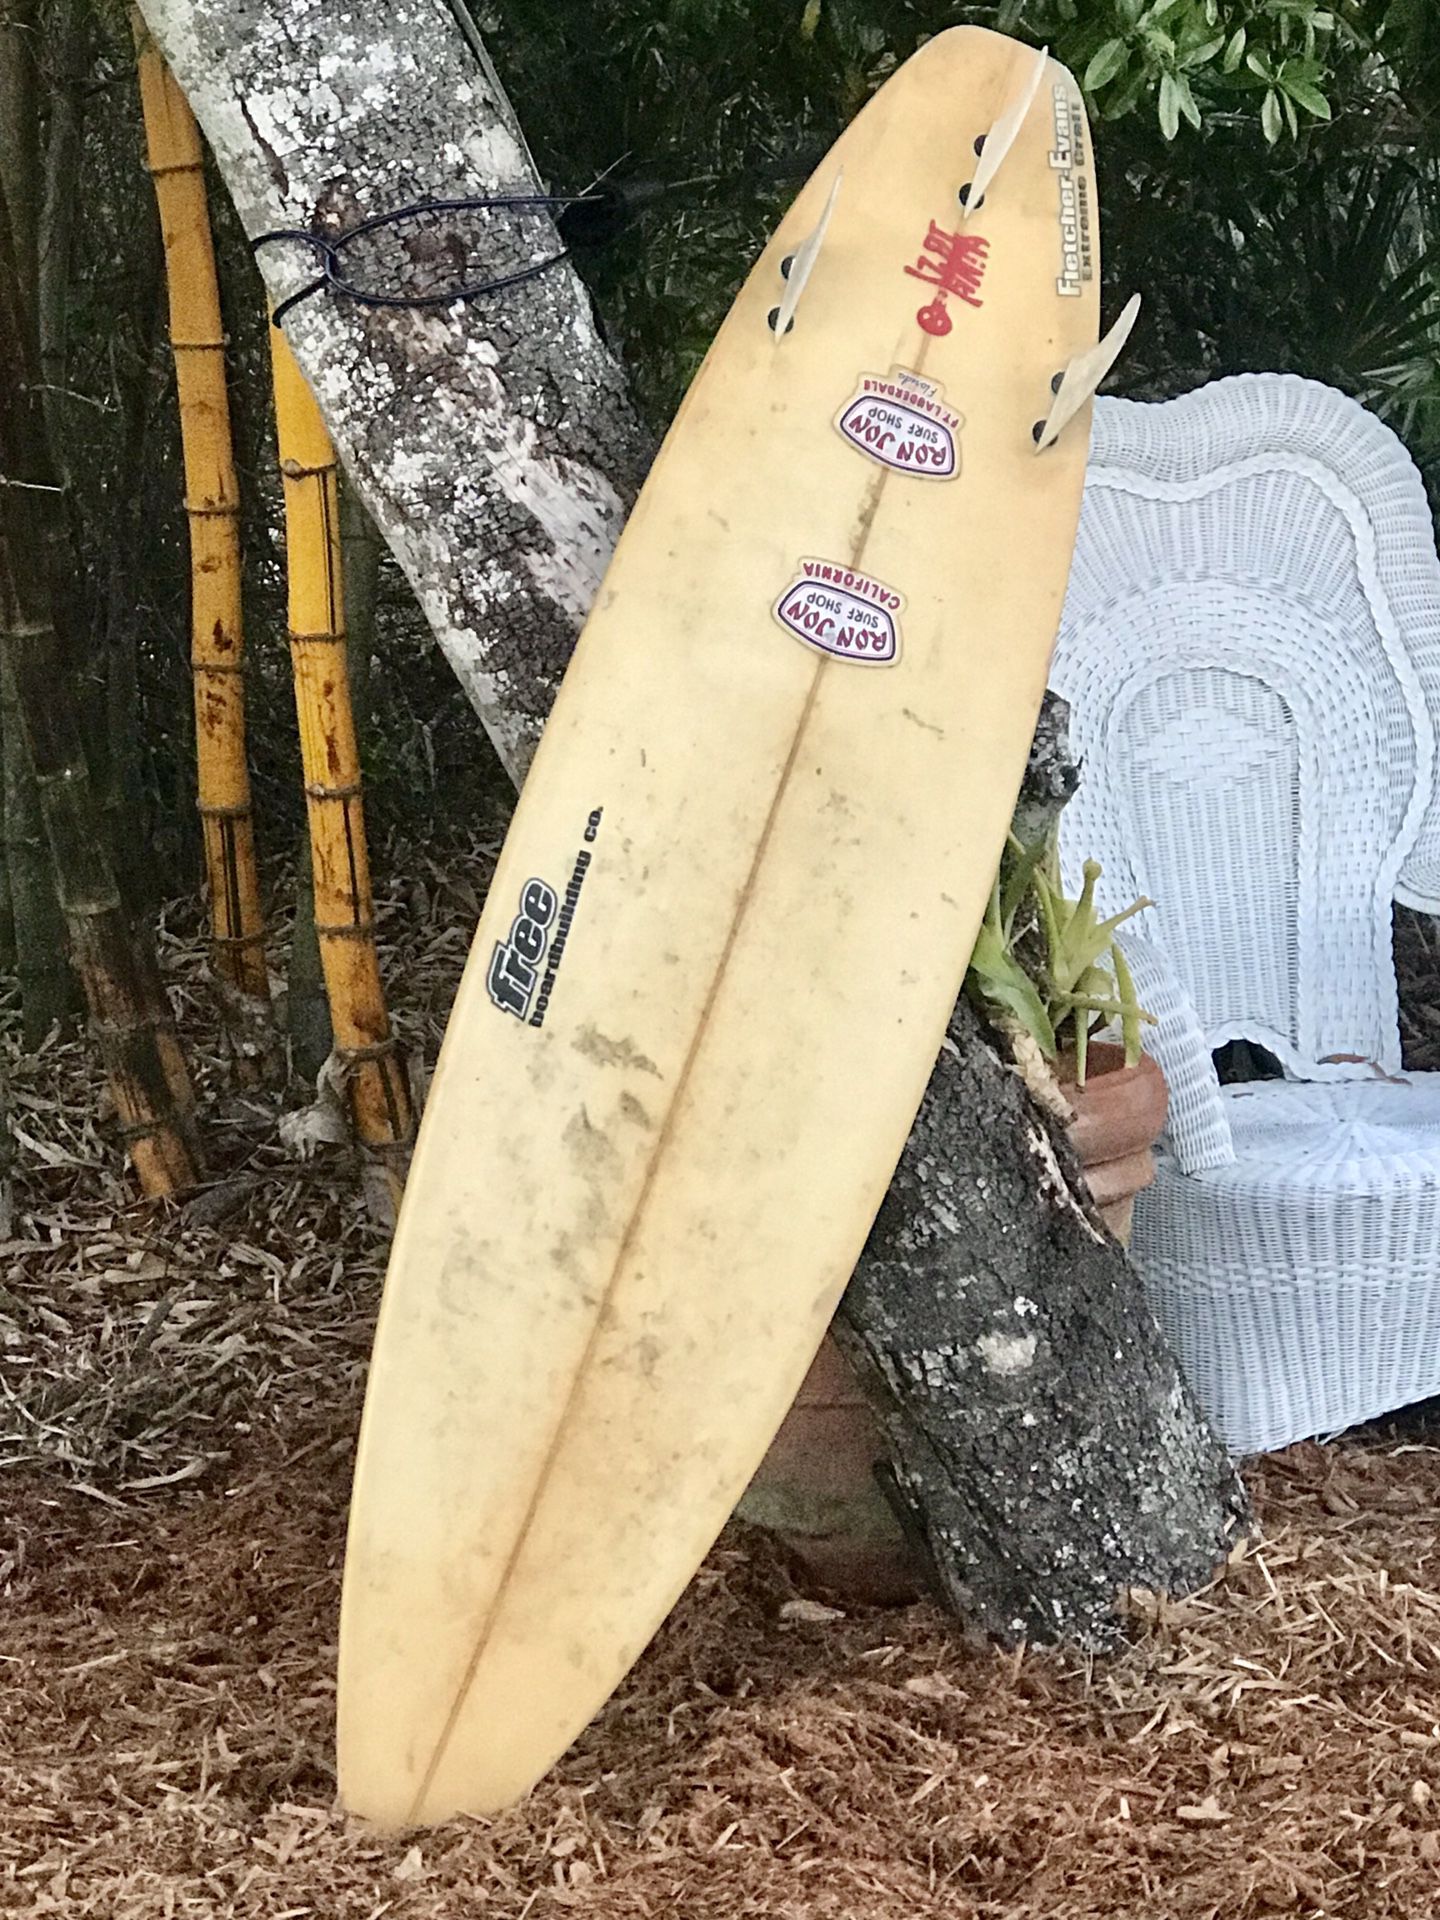 Fletcher Evans surfboard